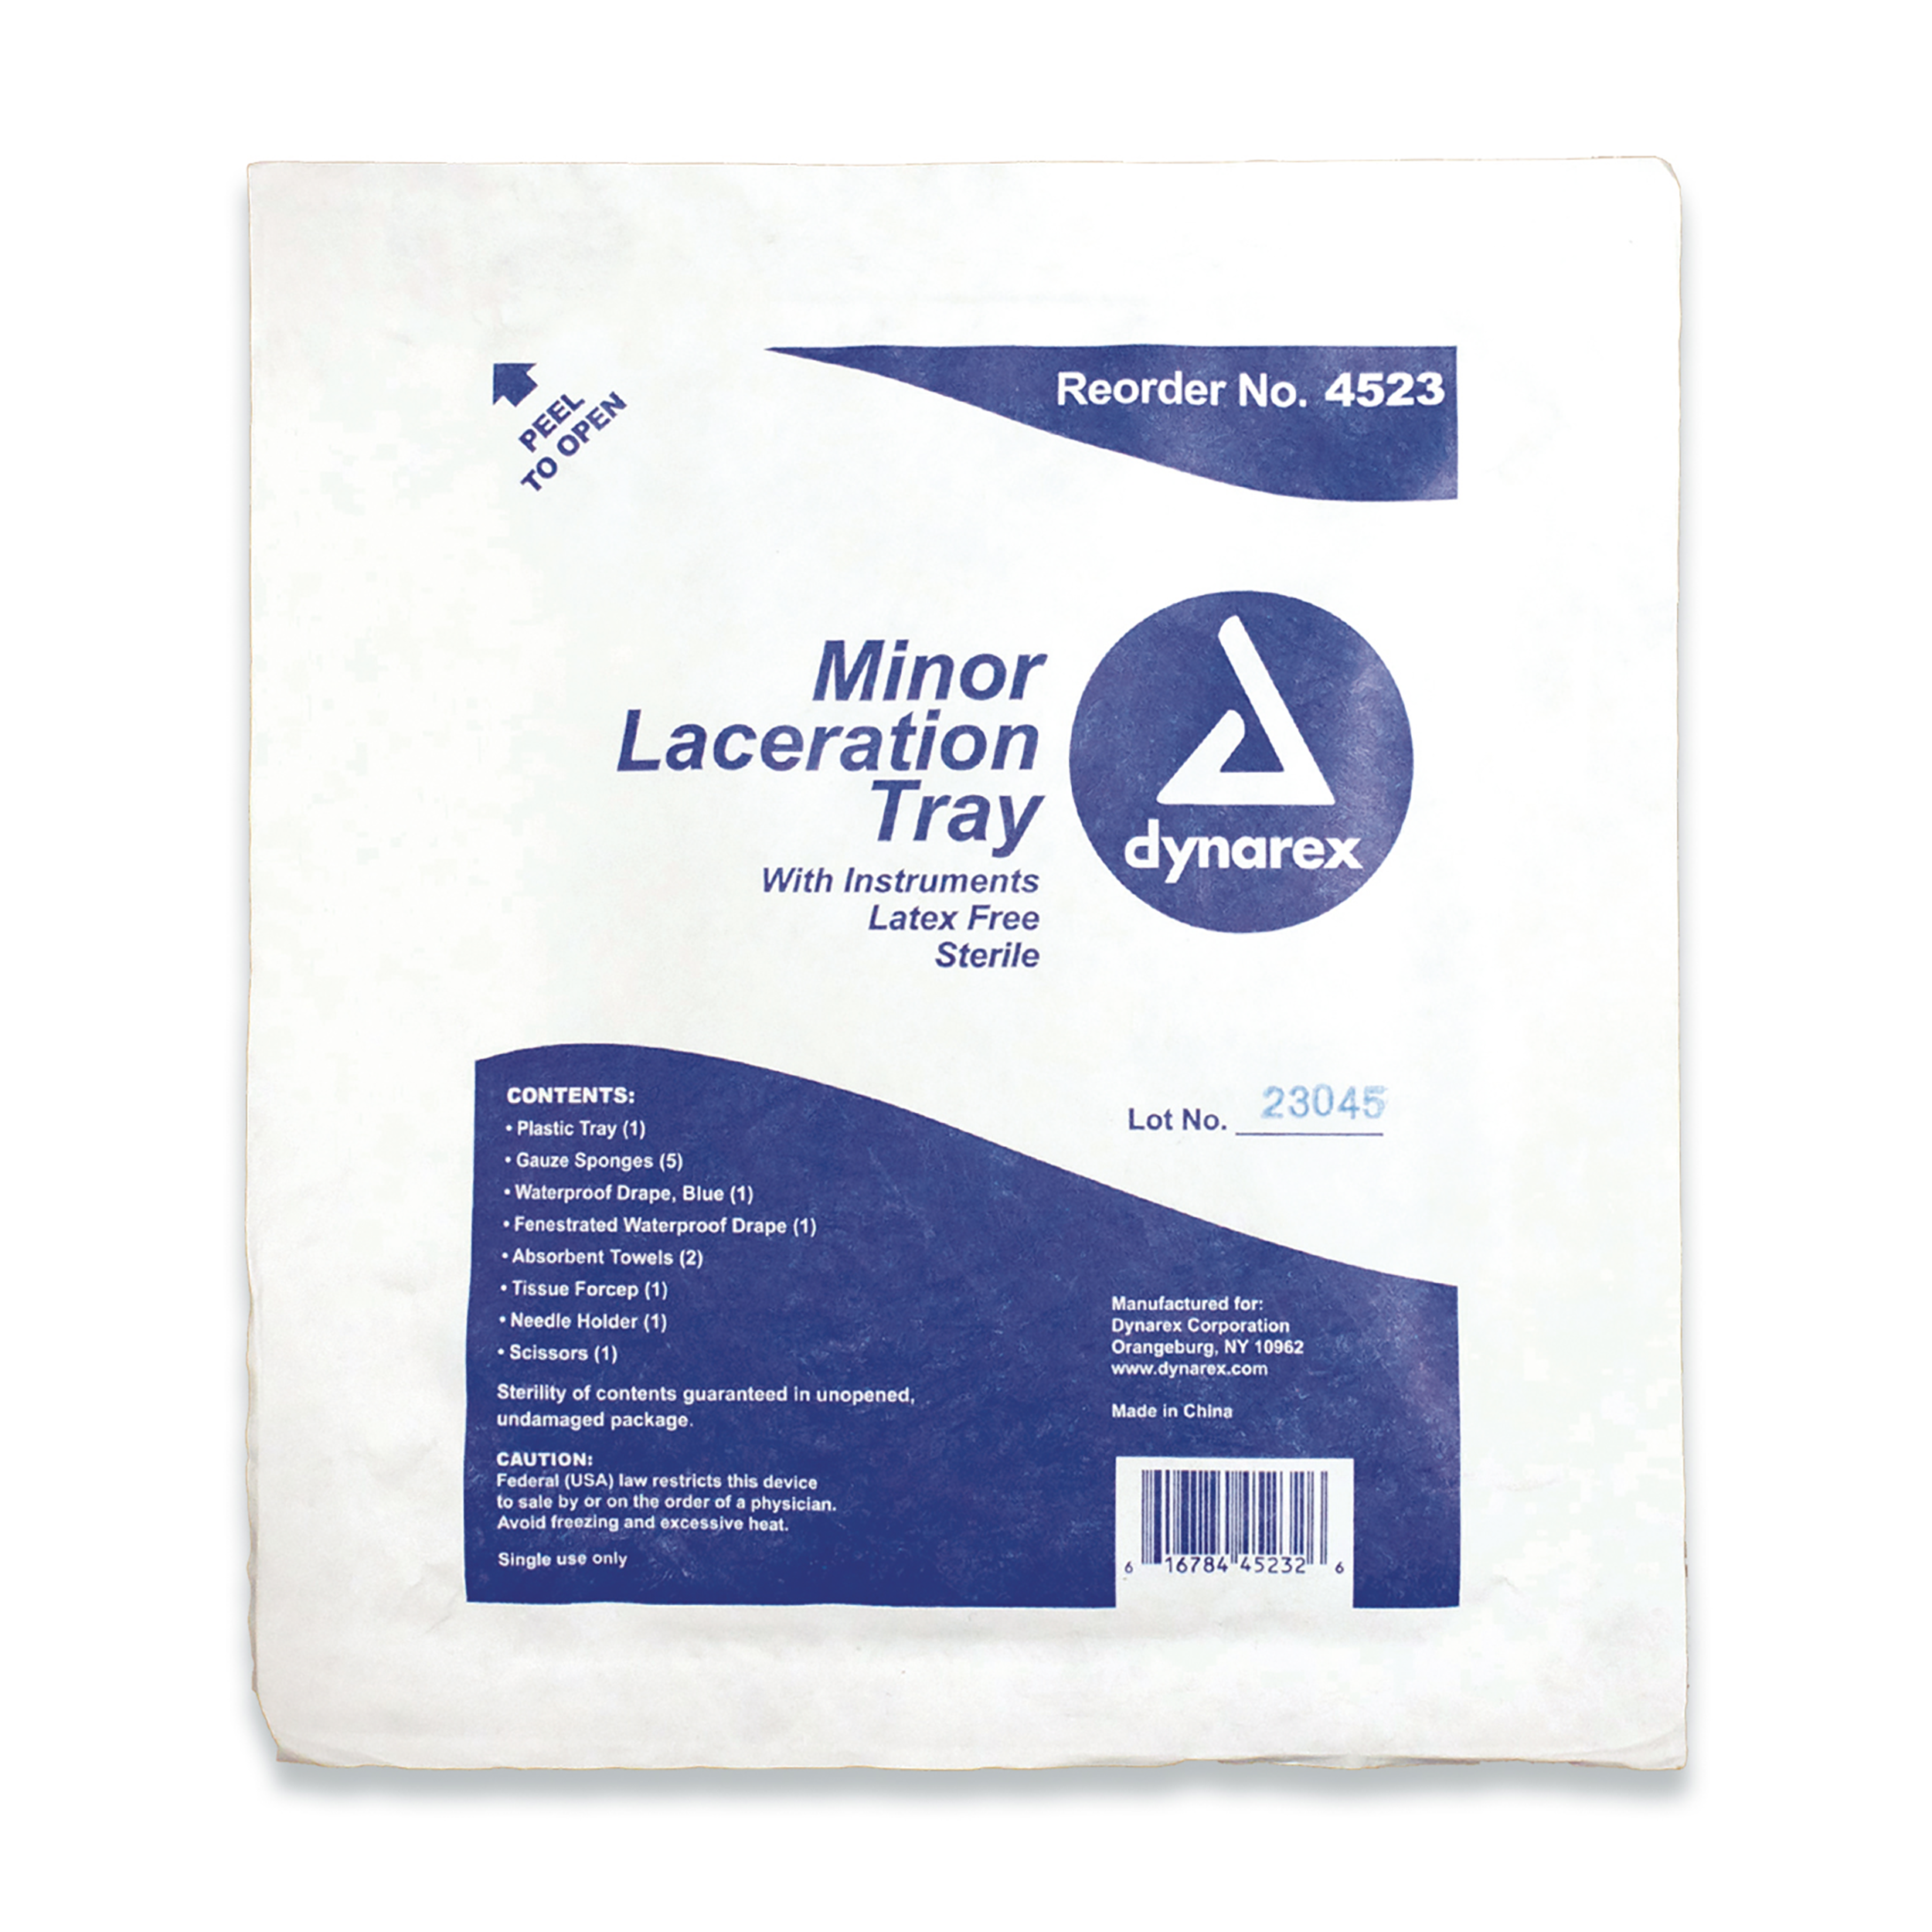 Minor Laceration Tray w/ Instruments